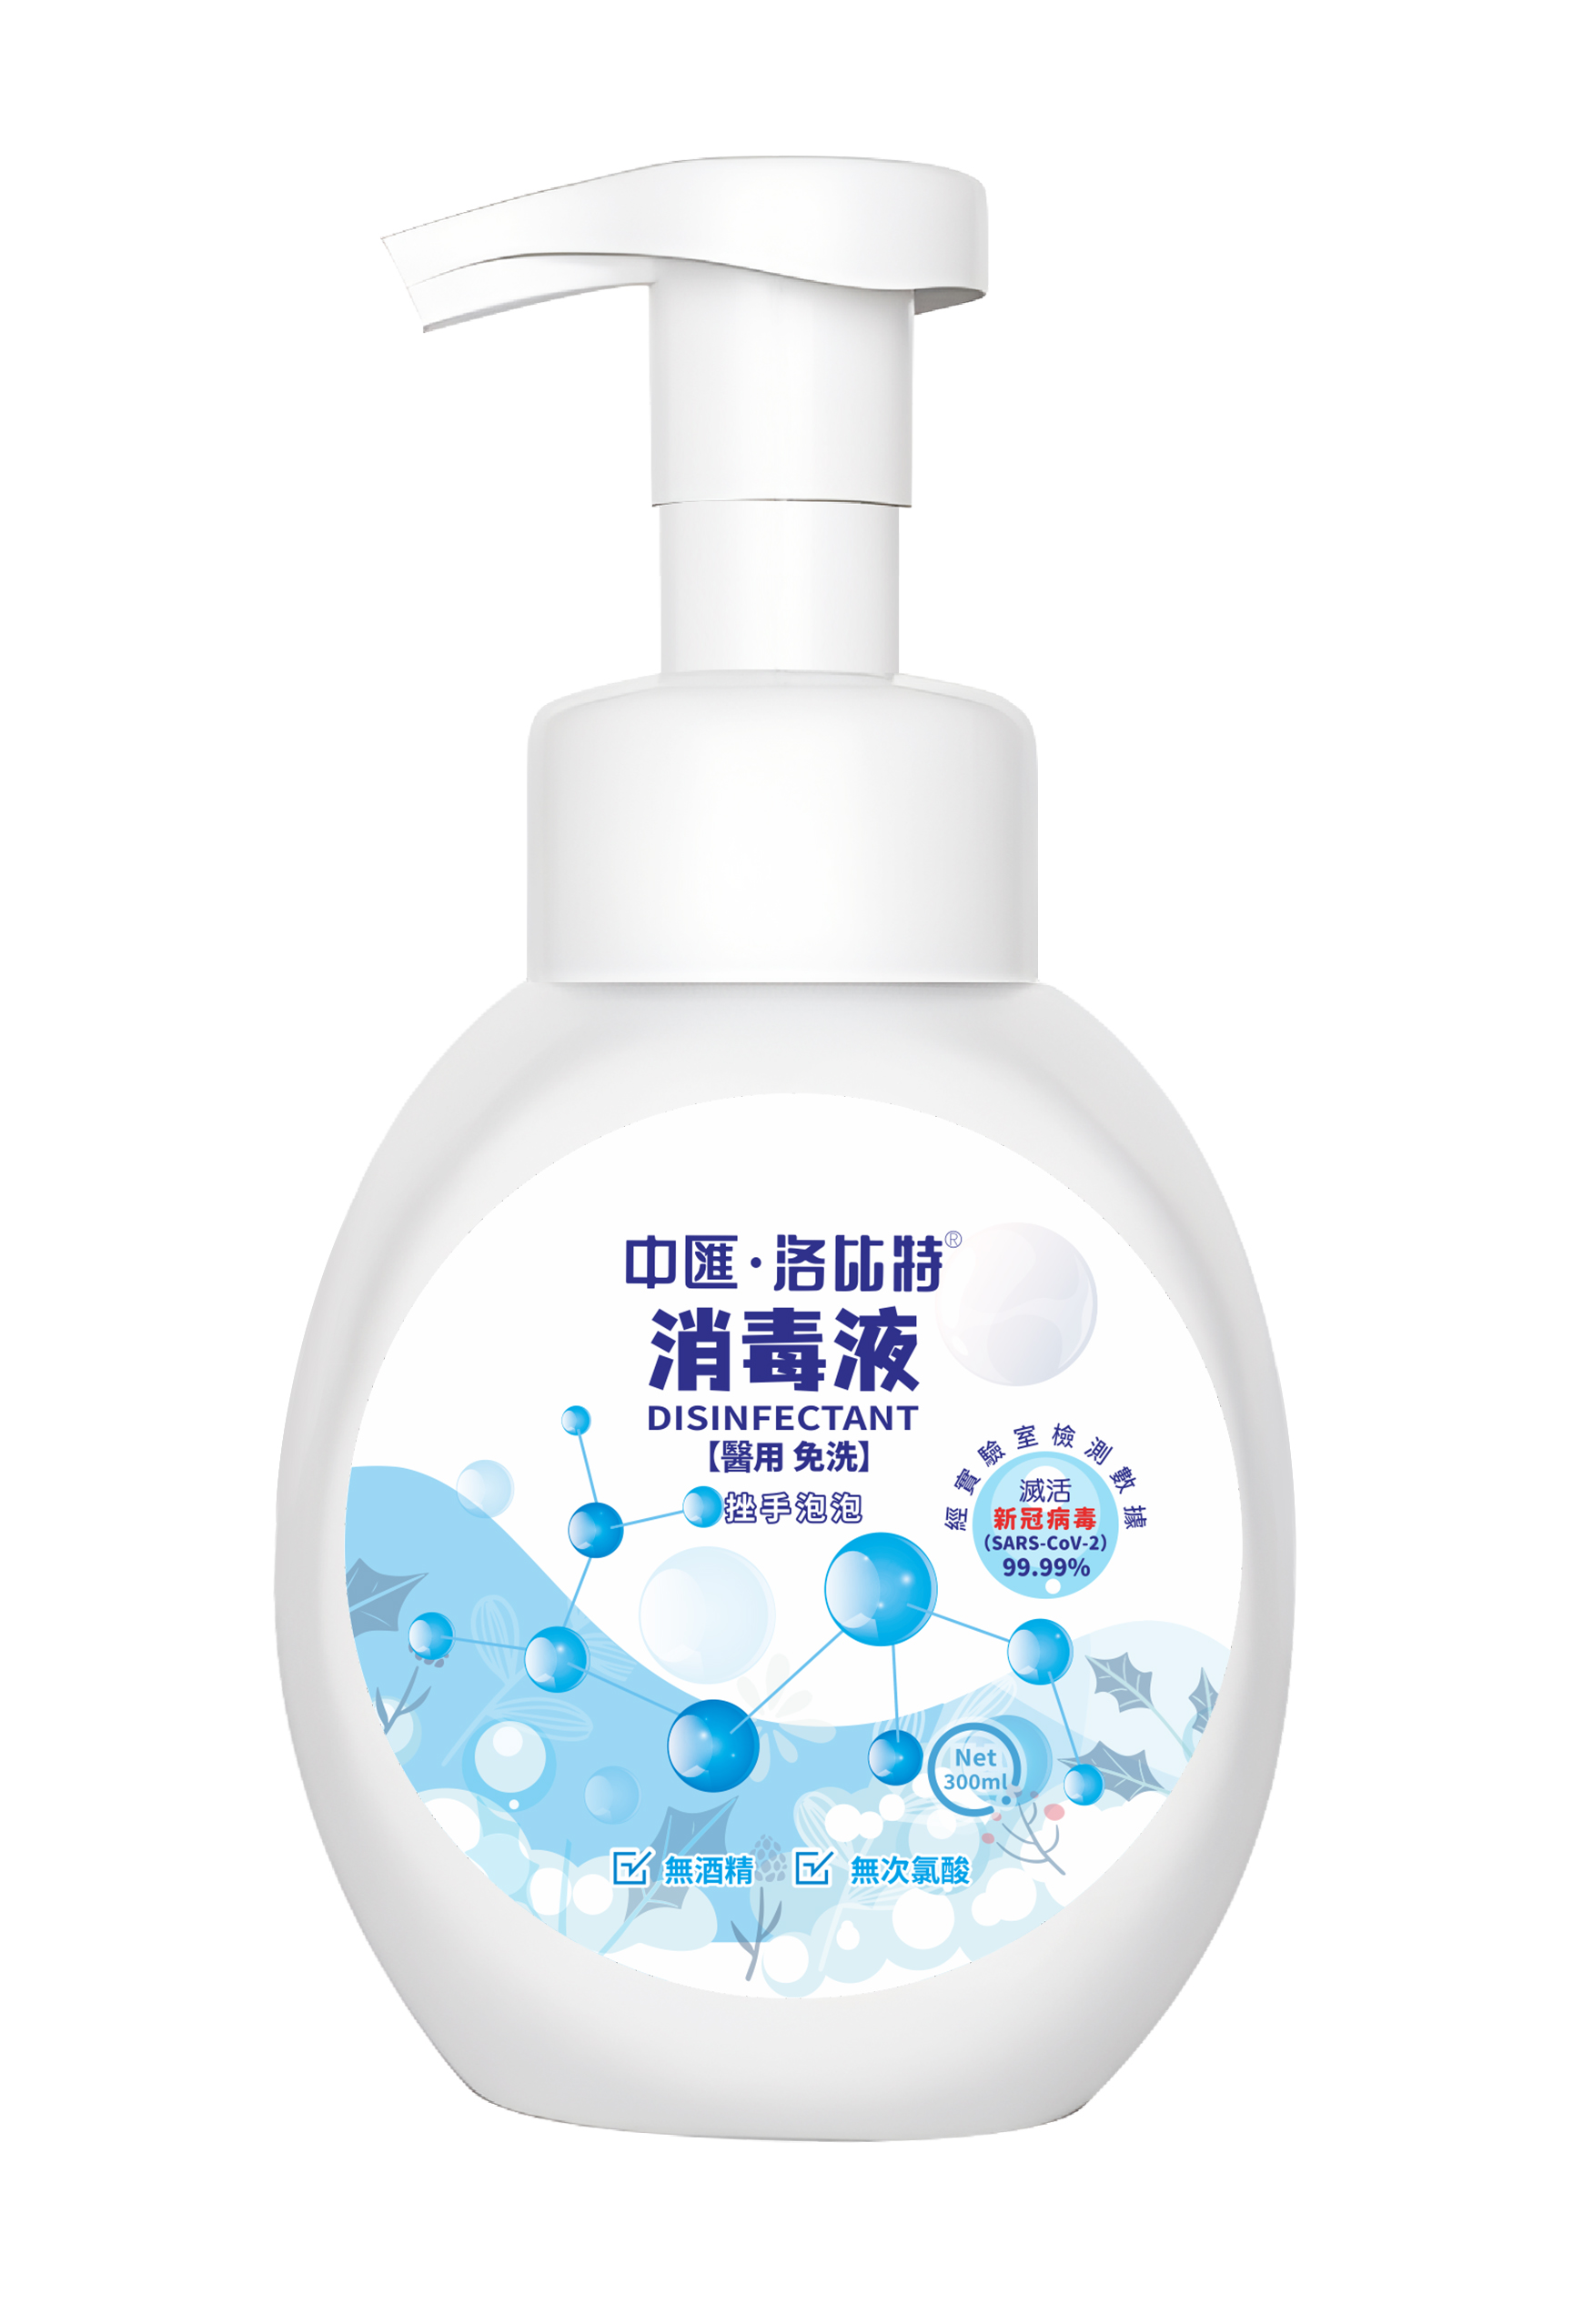 Zhonghui·Lobit. Disinfection Hand Bubble